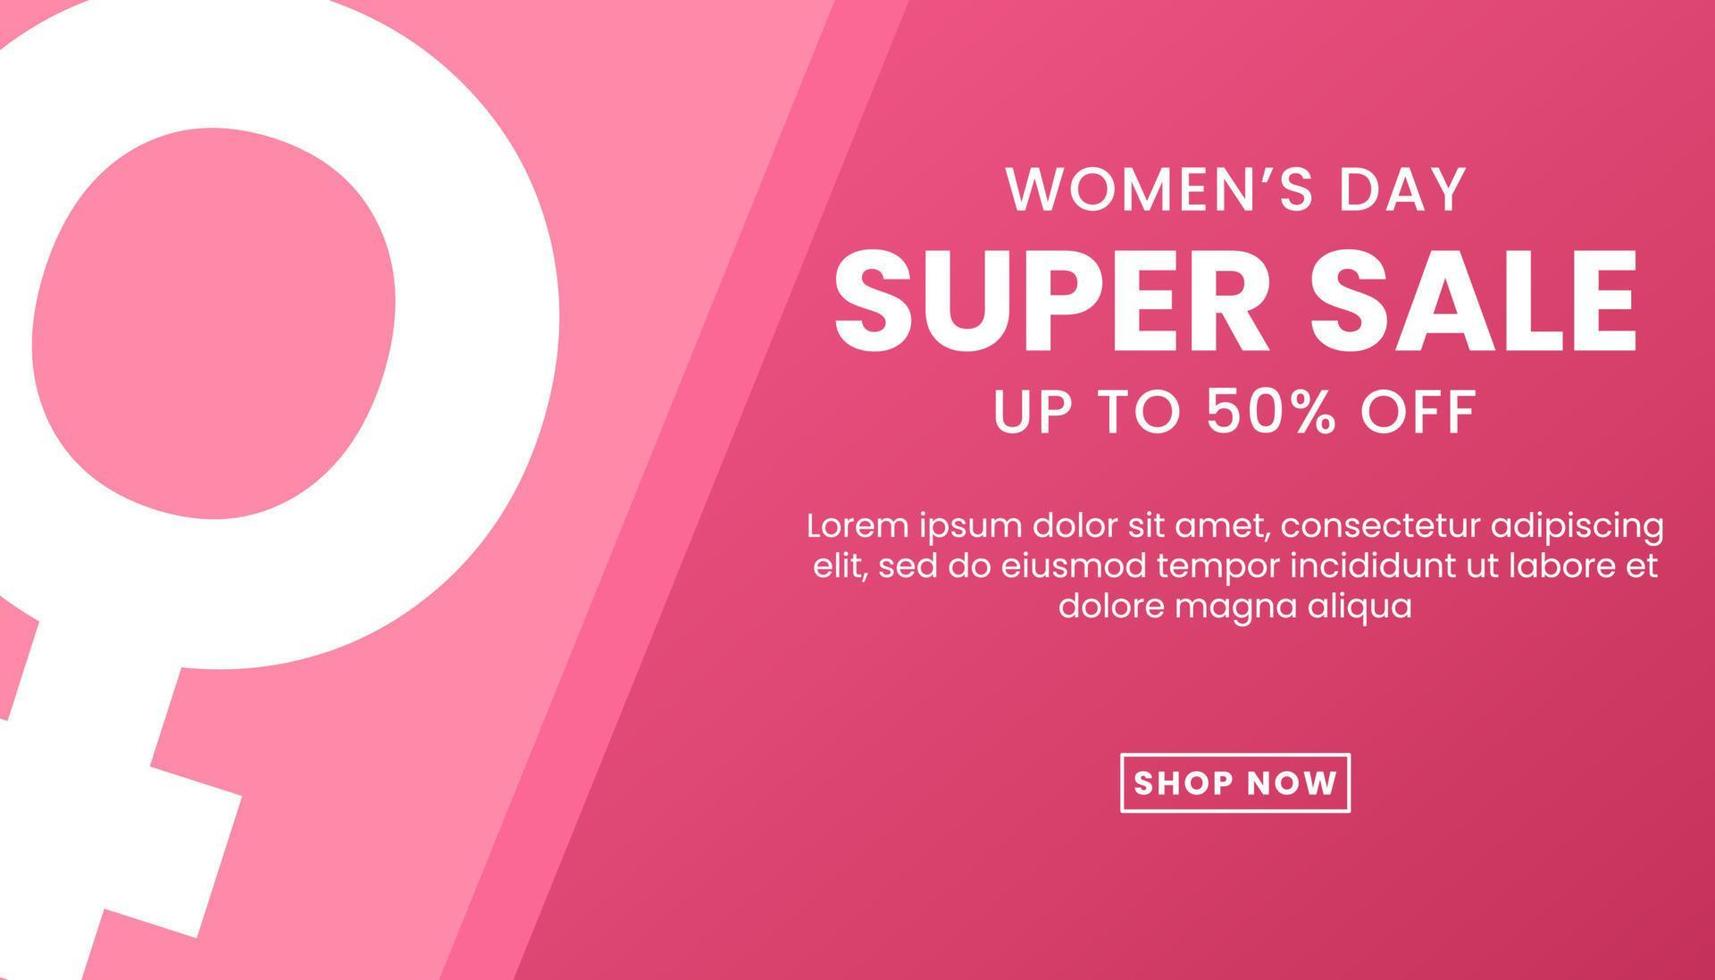 International Women's Day Super Sale Banner vector